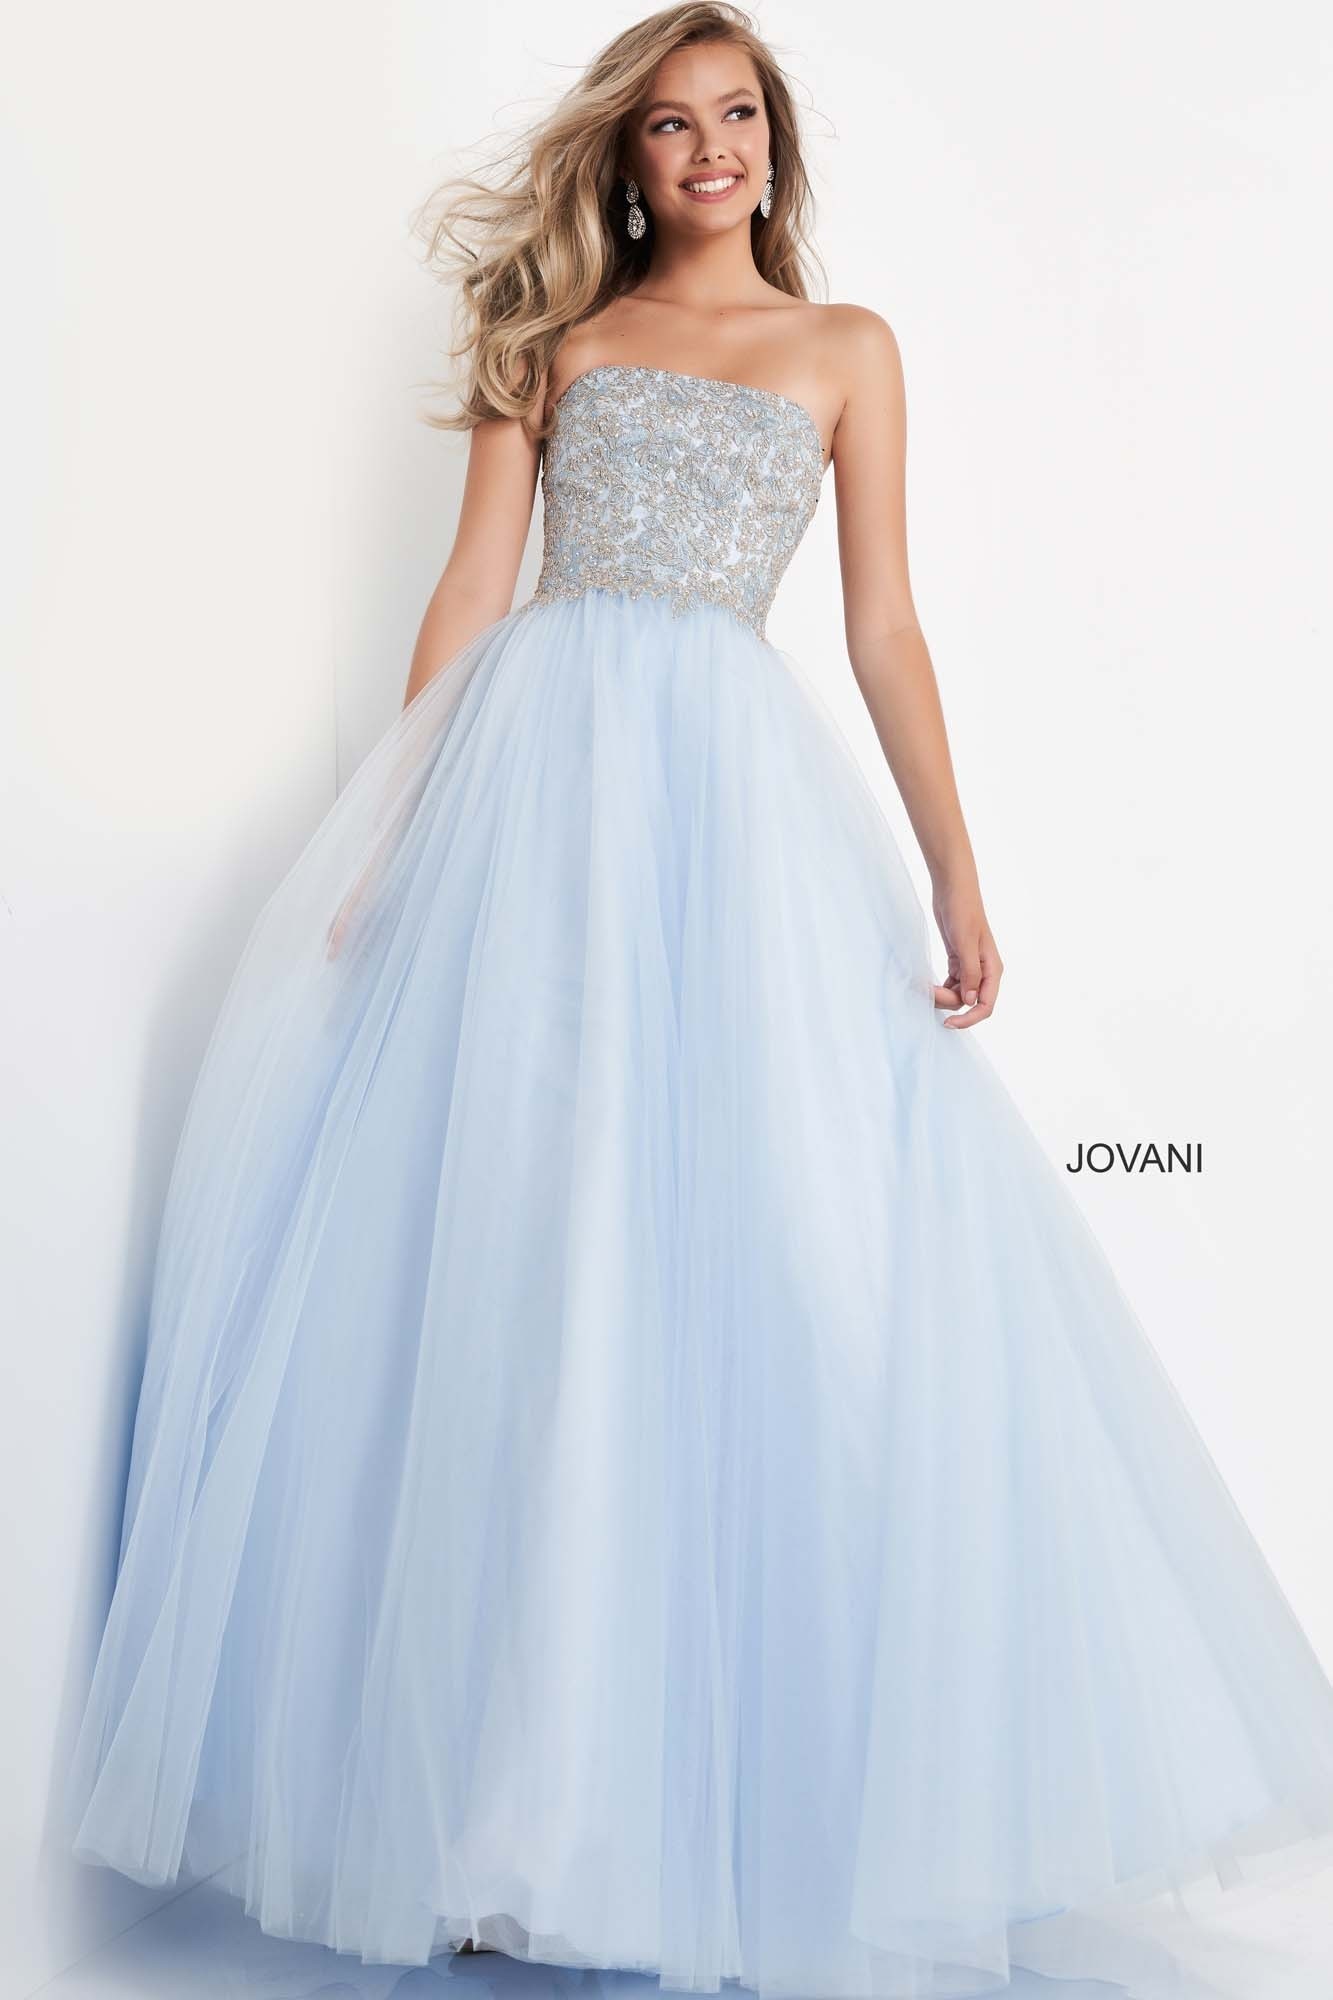 Jovani K04710 Embellished Bodice Girls Dress 